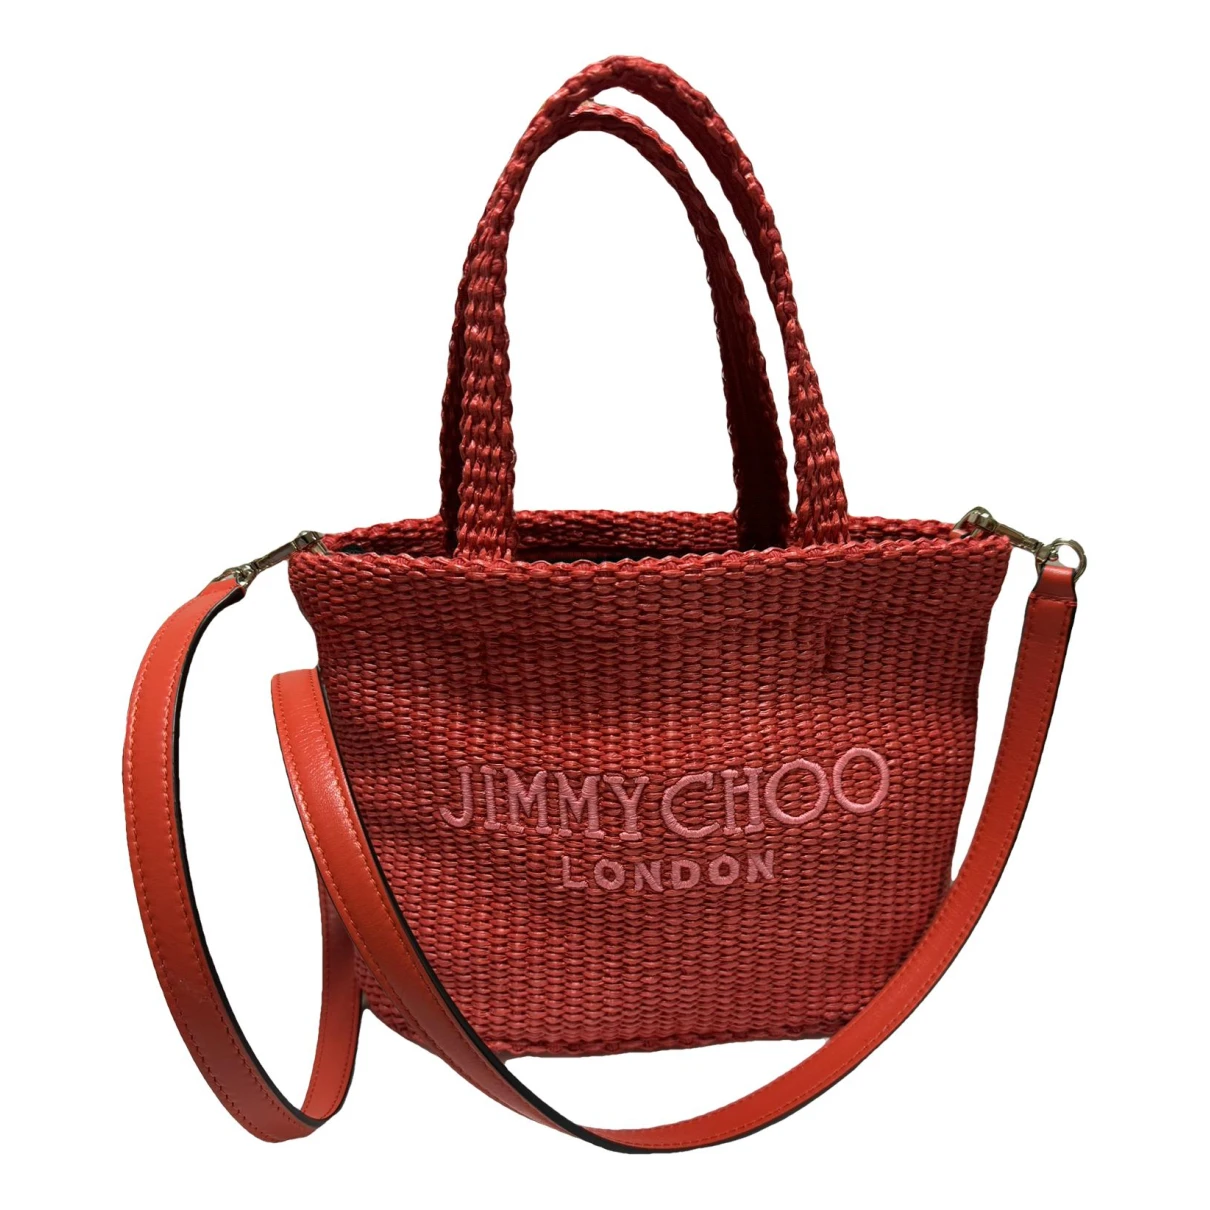 Pre-owned Jimmy Choo Tote In Red